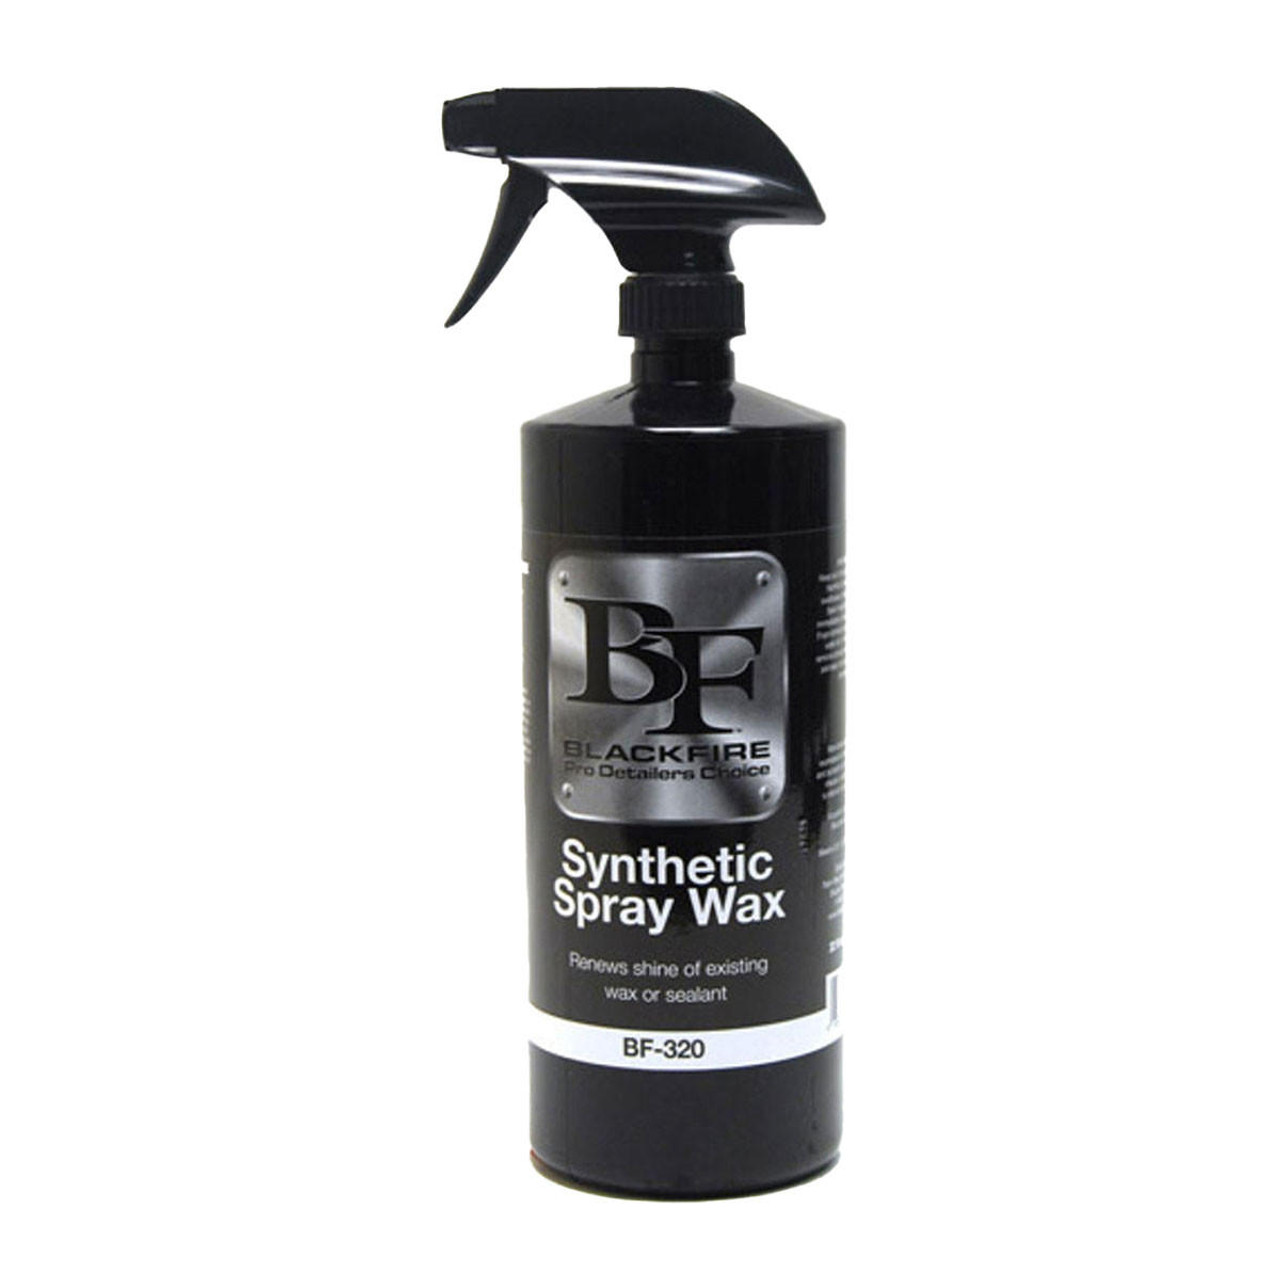 BLACKFIRE Synthetic Spray Wax 32 oz